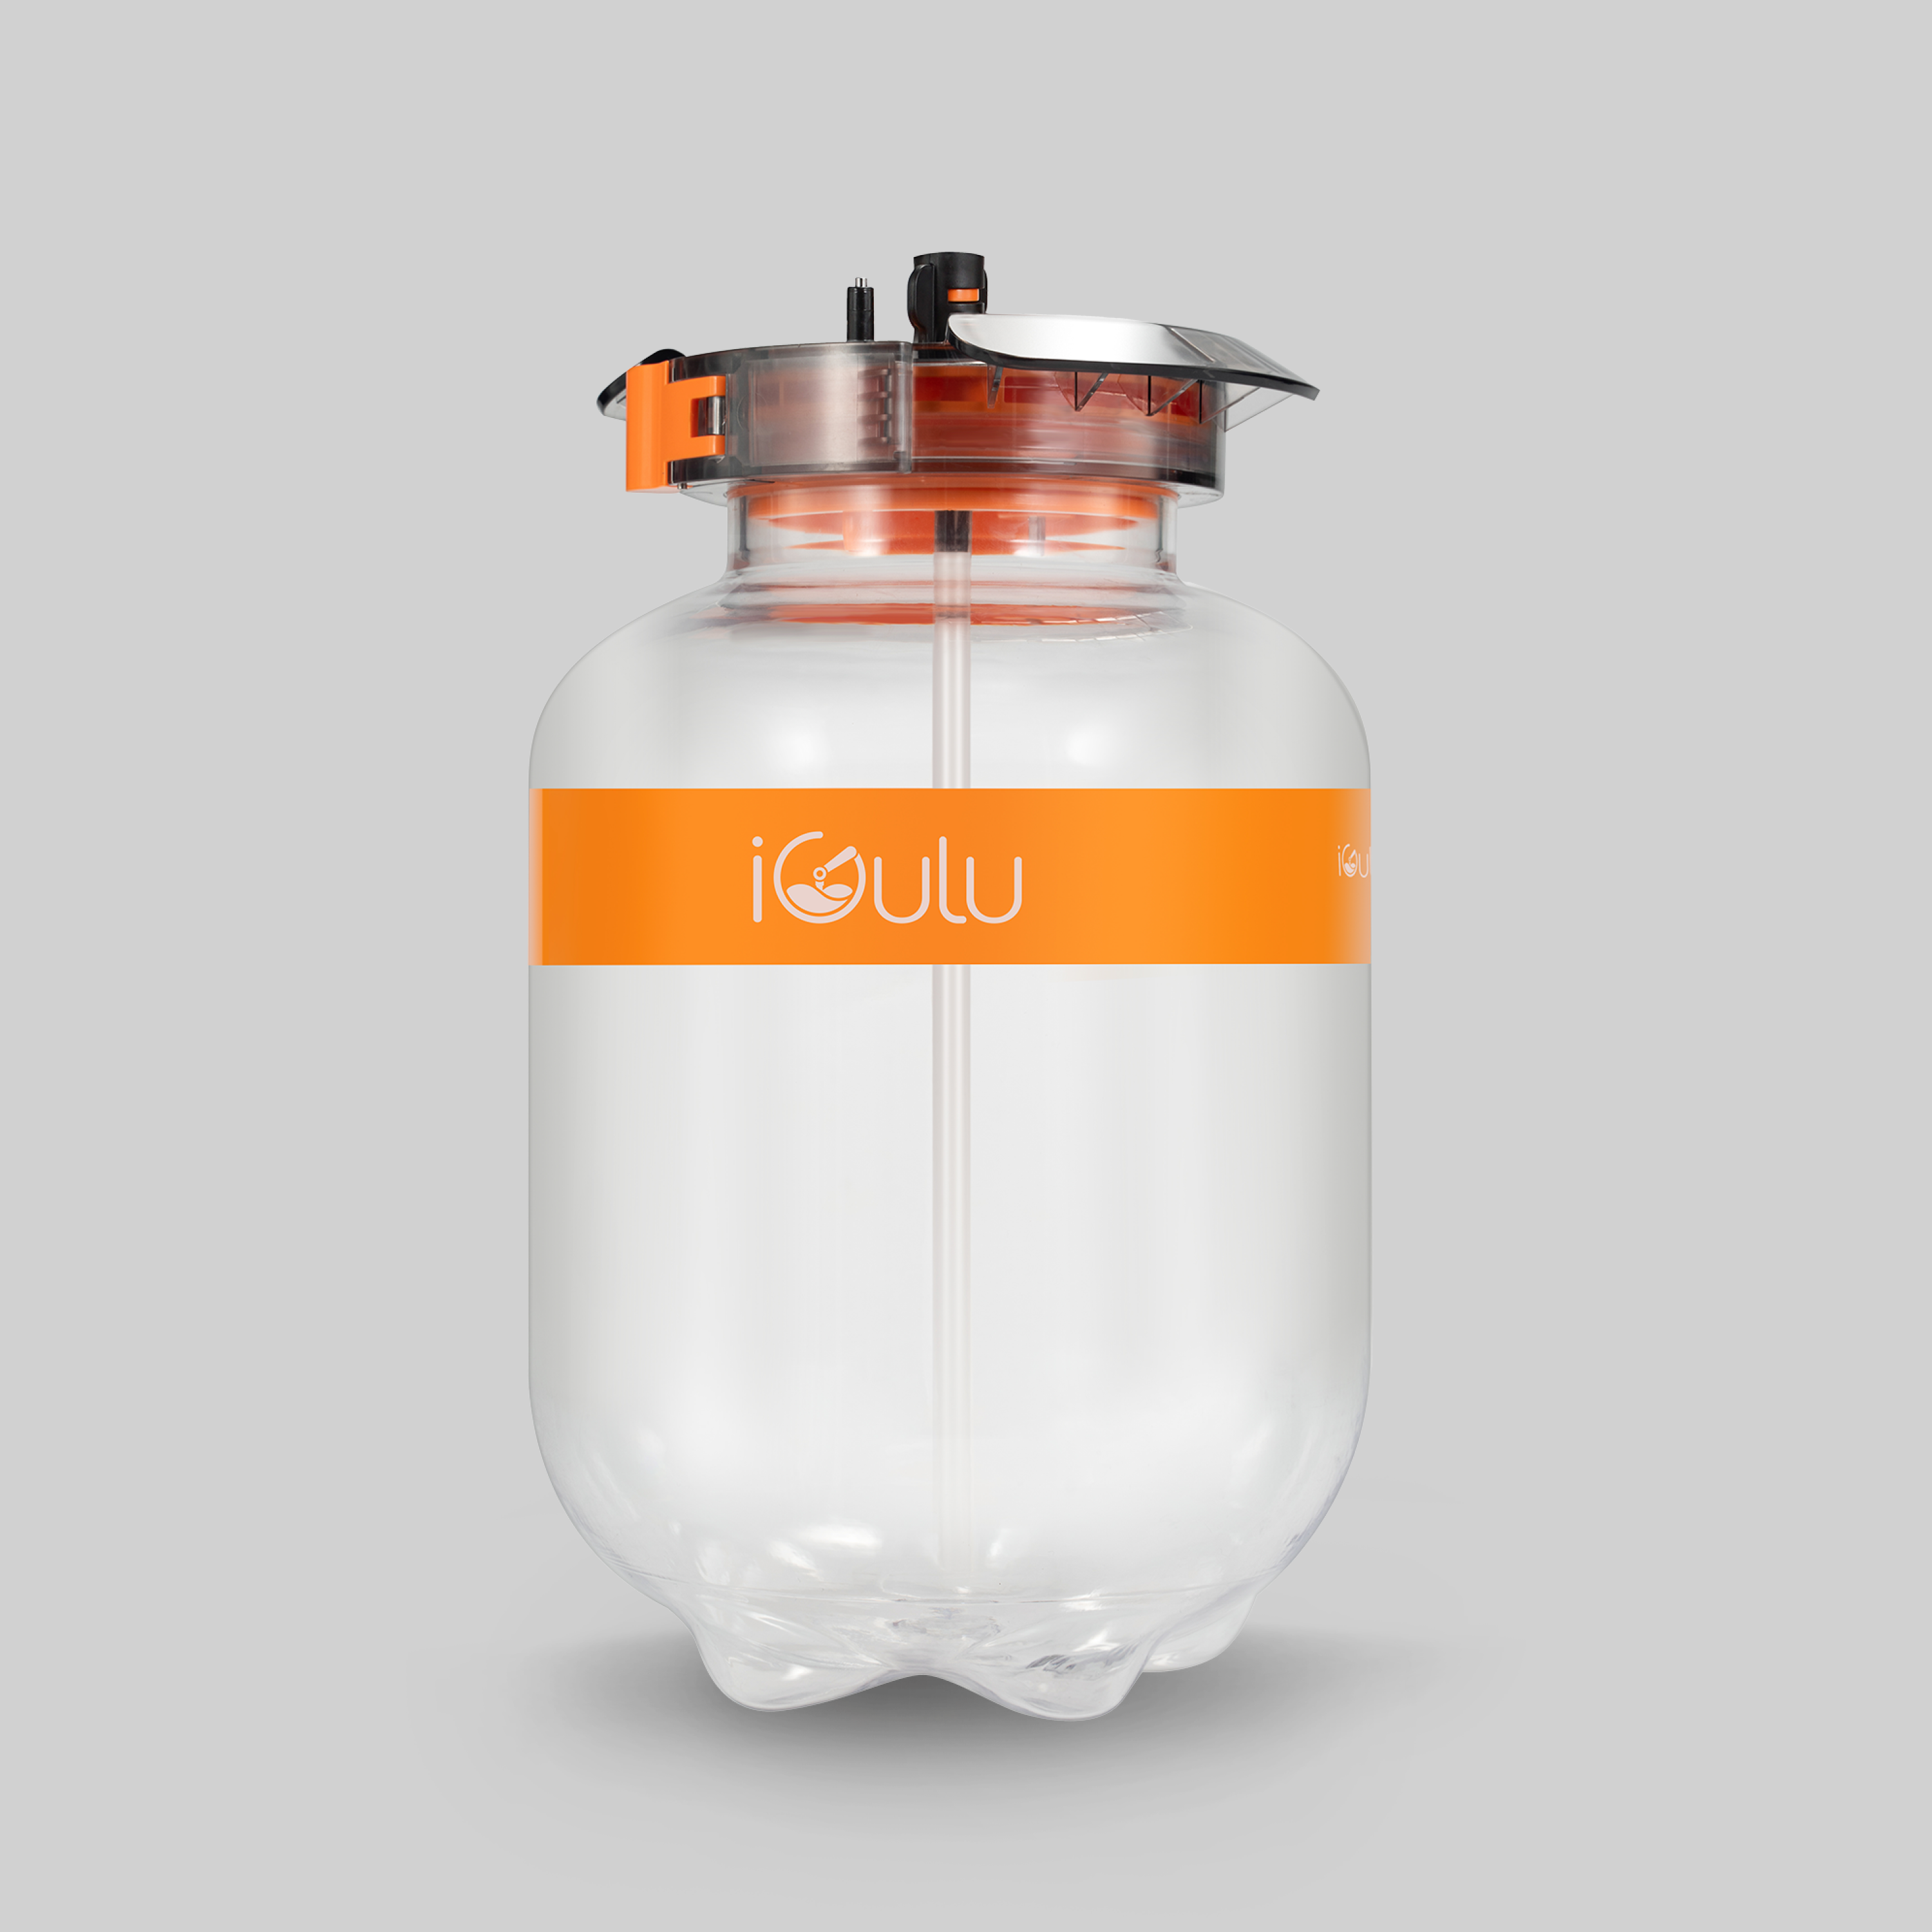 Tanque de fermentación iGulu F1